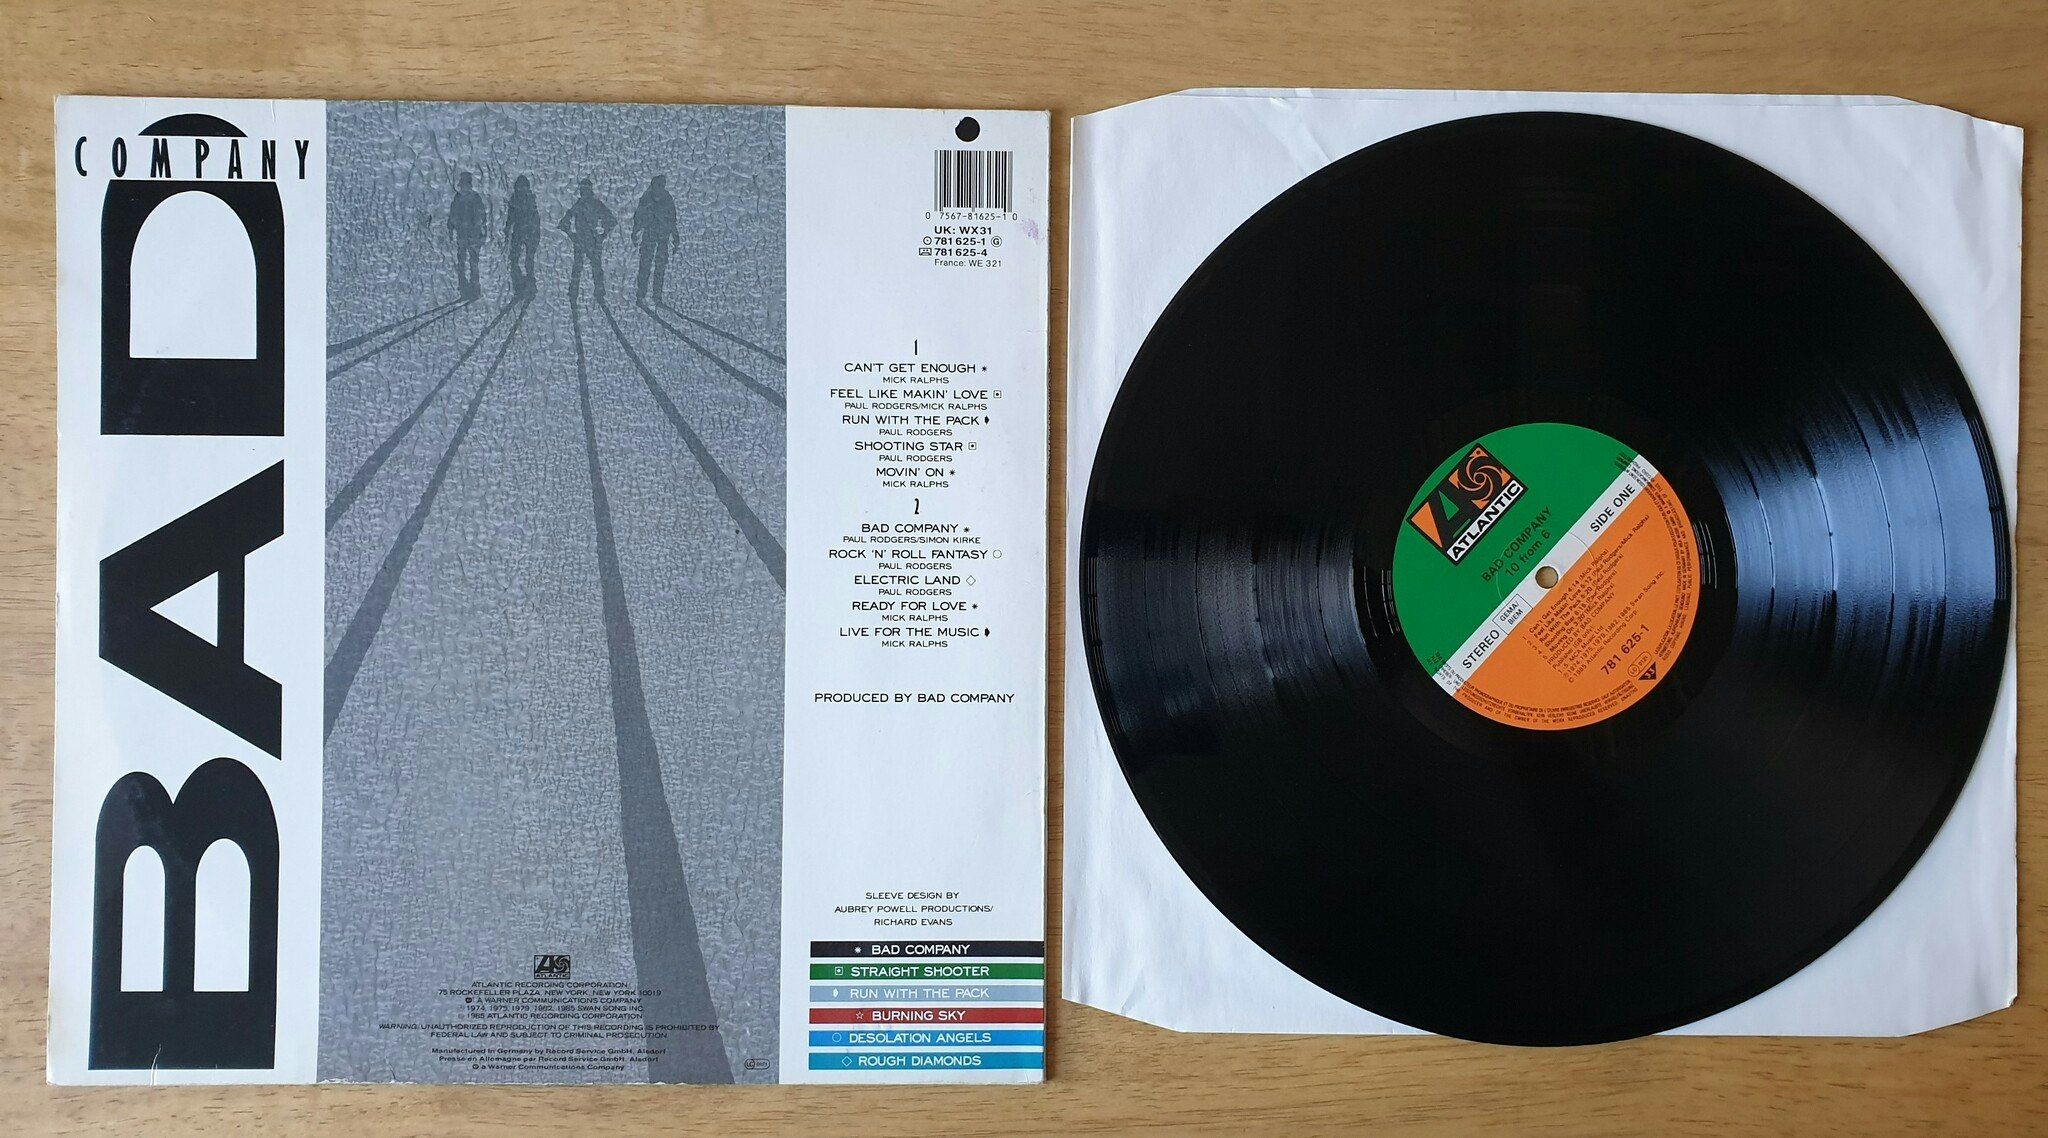 Bad Company, 10 from 6. Vinyl LP